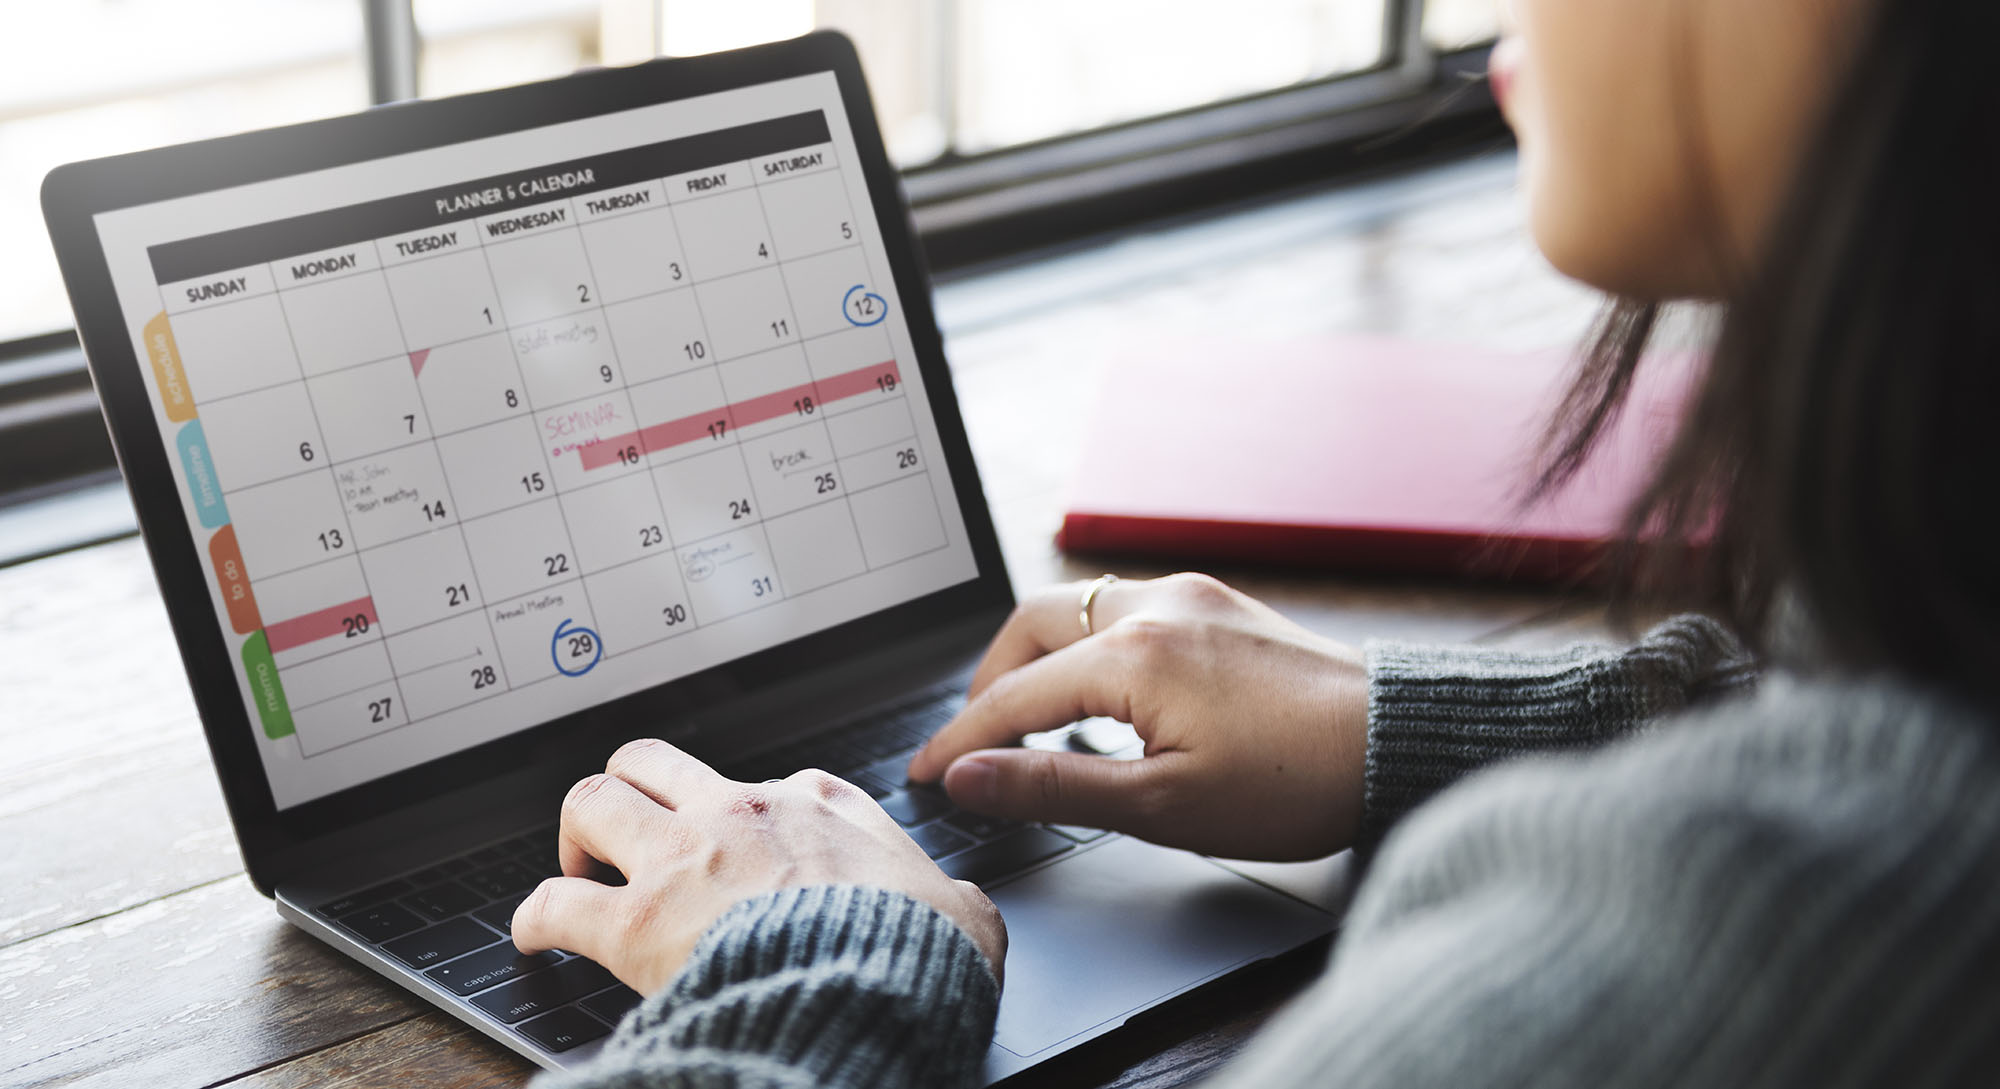 Woman using laptop to view a calendar application